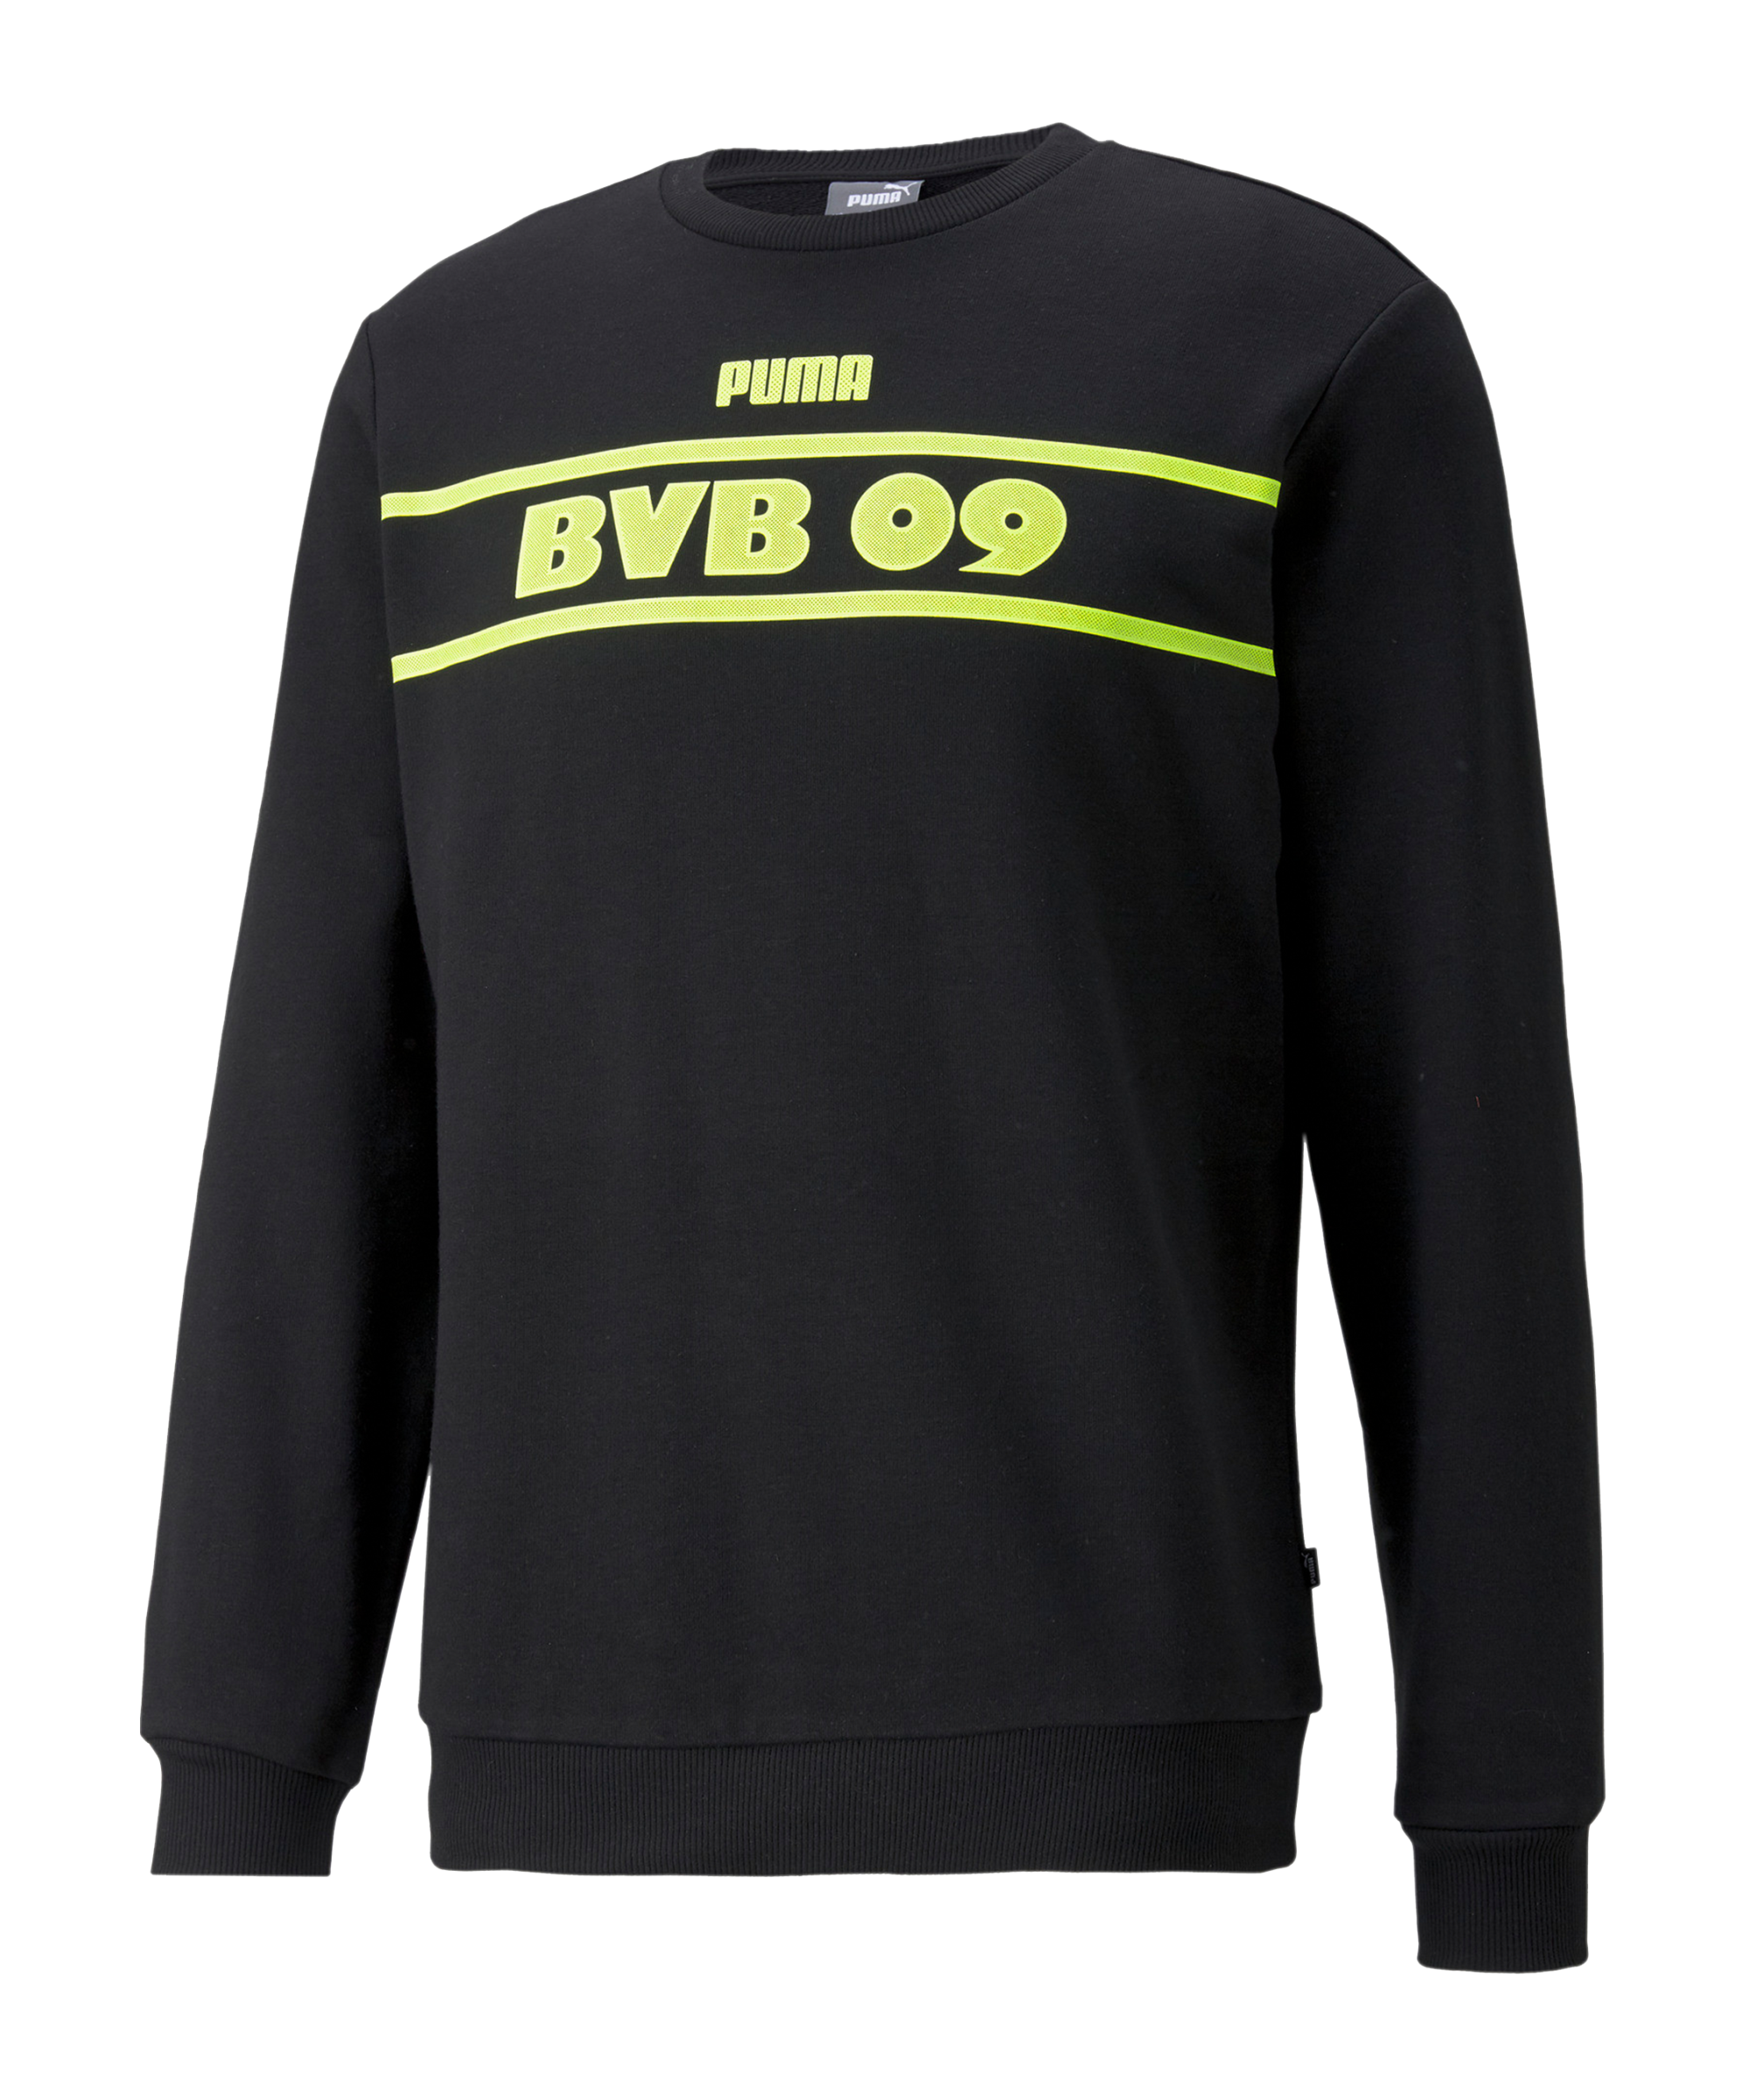 Hanorac Puma BVB Dortmund FtblLegacy Crew Sweatshirt